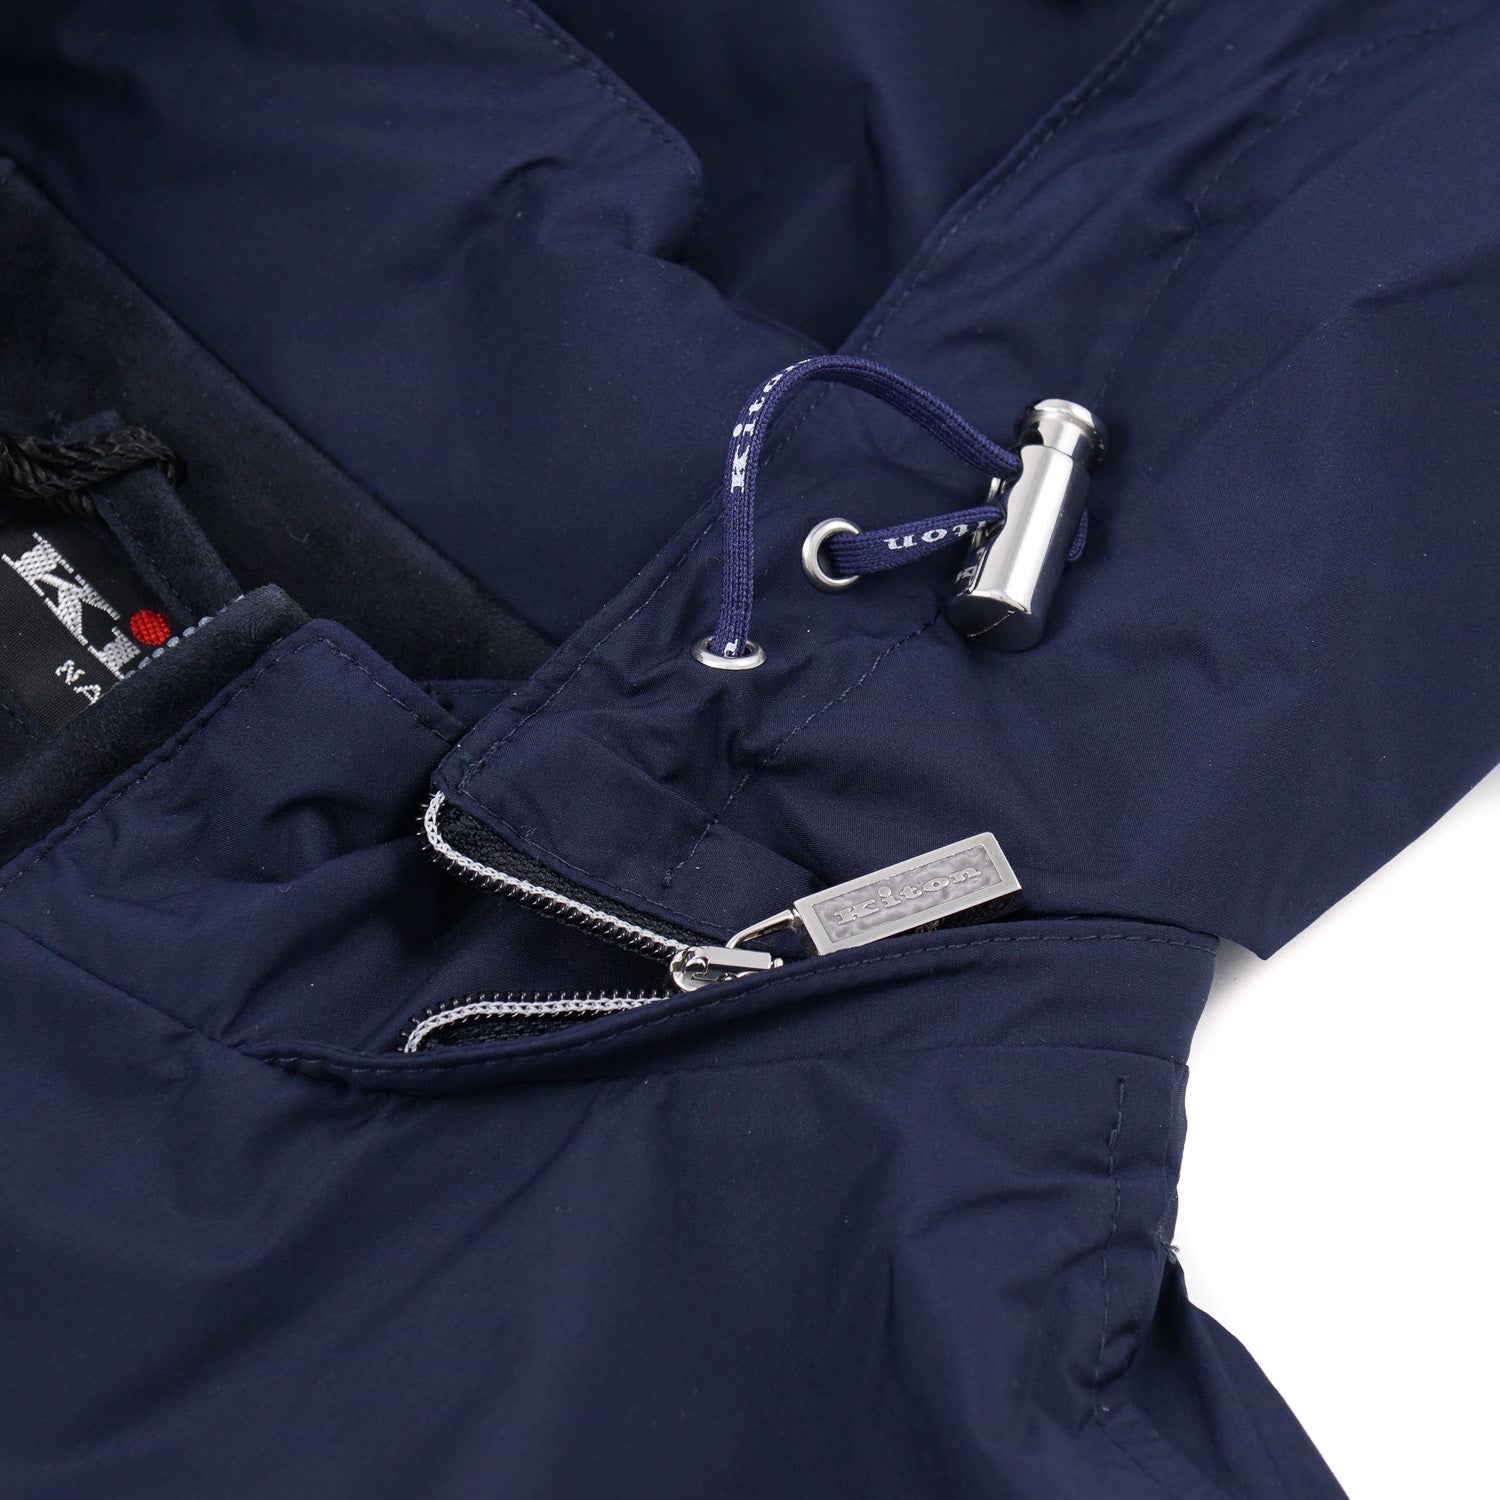 Kiton Lightweight Packable Hooded Jacket - Top Shelf Apparel